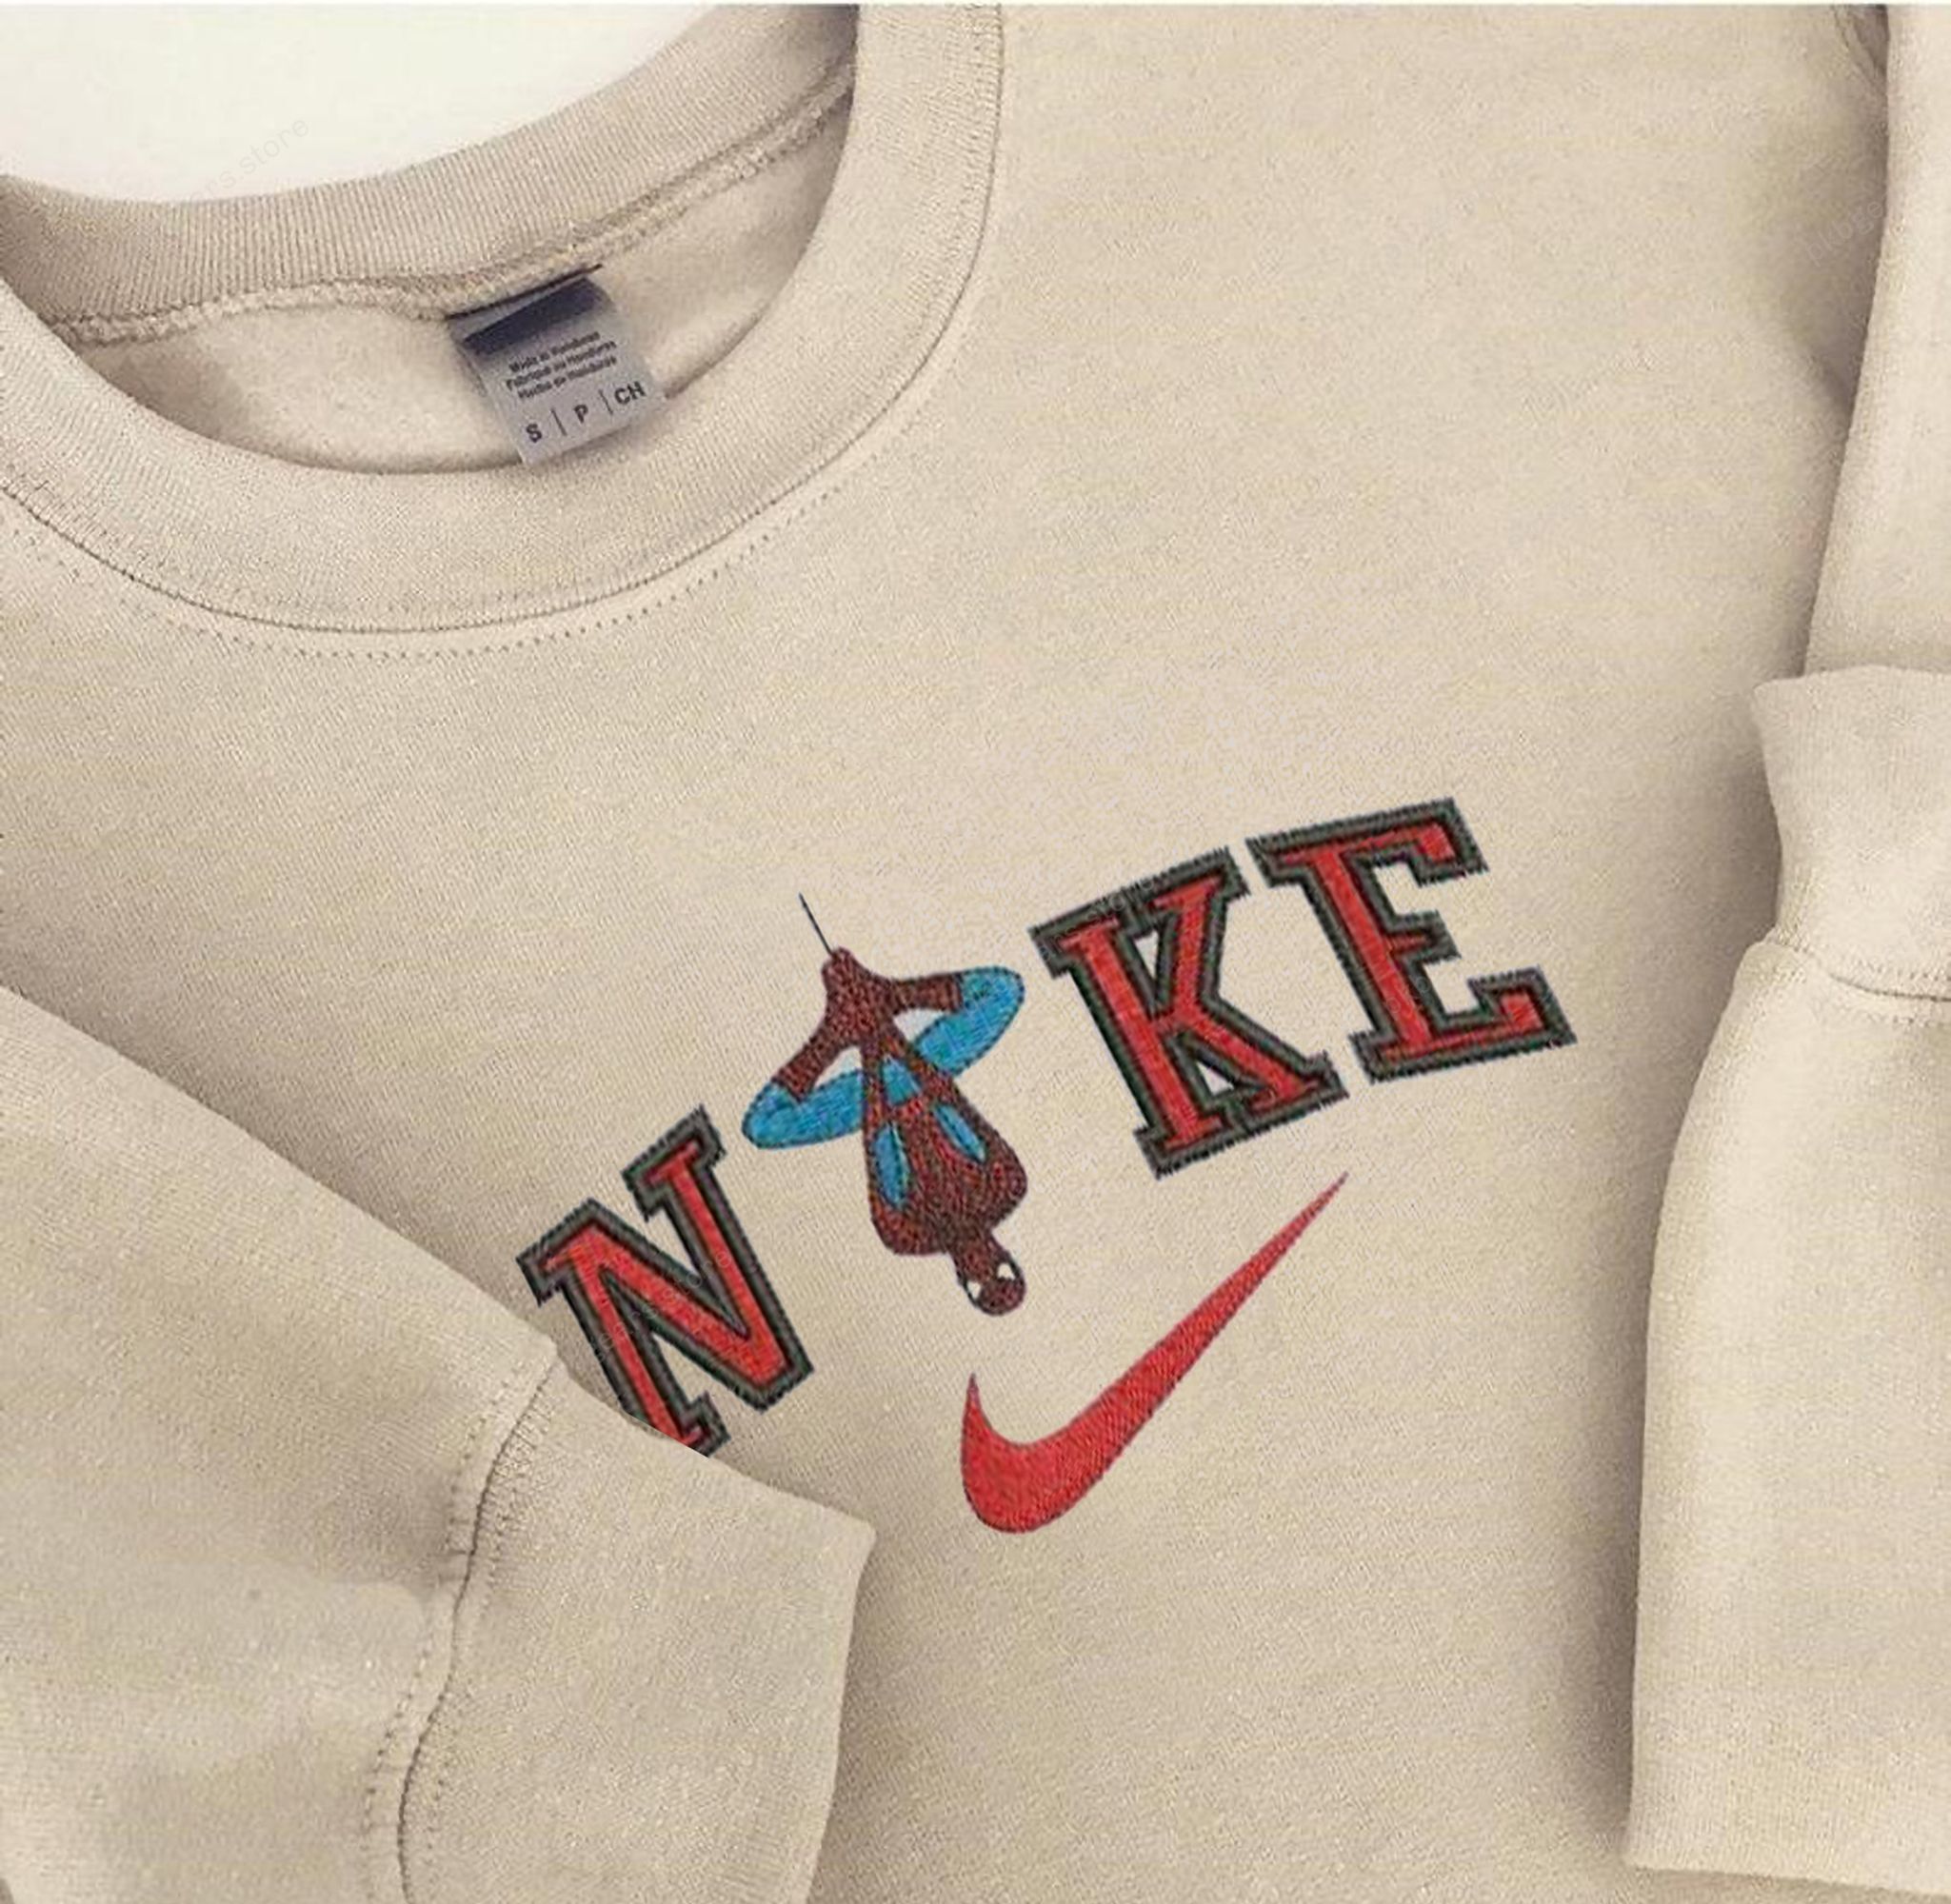 Inspired by Nike Spiderman Embroidered Crewneck Sweatshirt, T-Shirt, Hoodie Full Colors|Vintage Nike Inspired Shirt|Trendy Sweatshirt